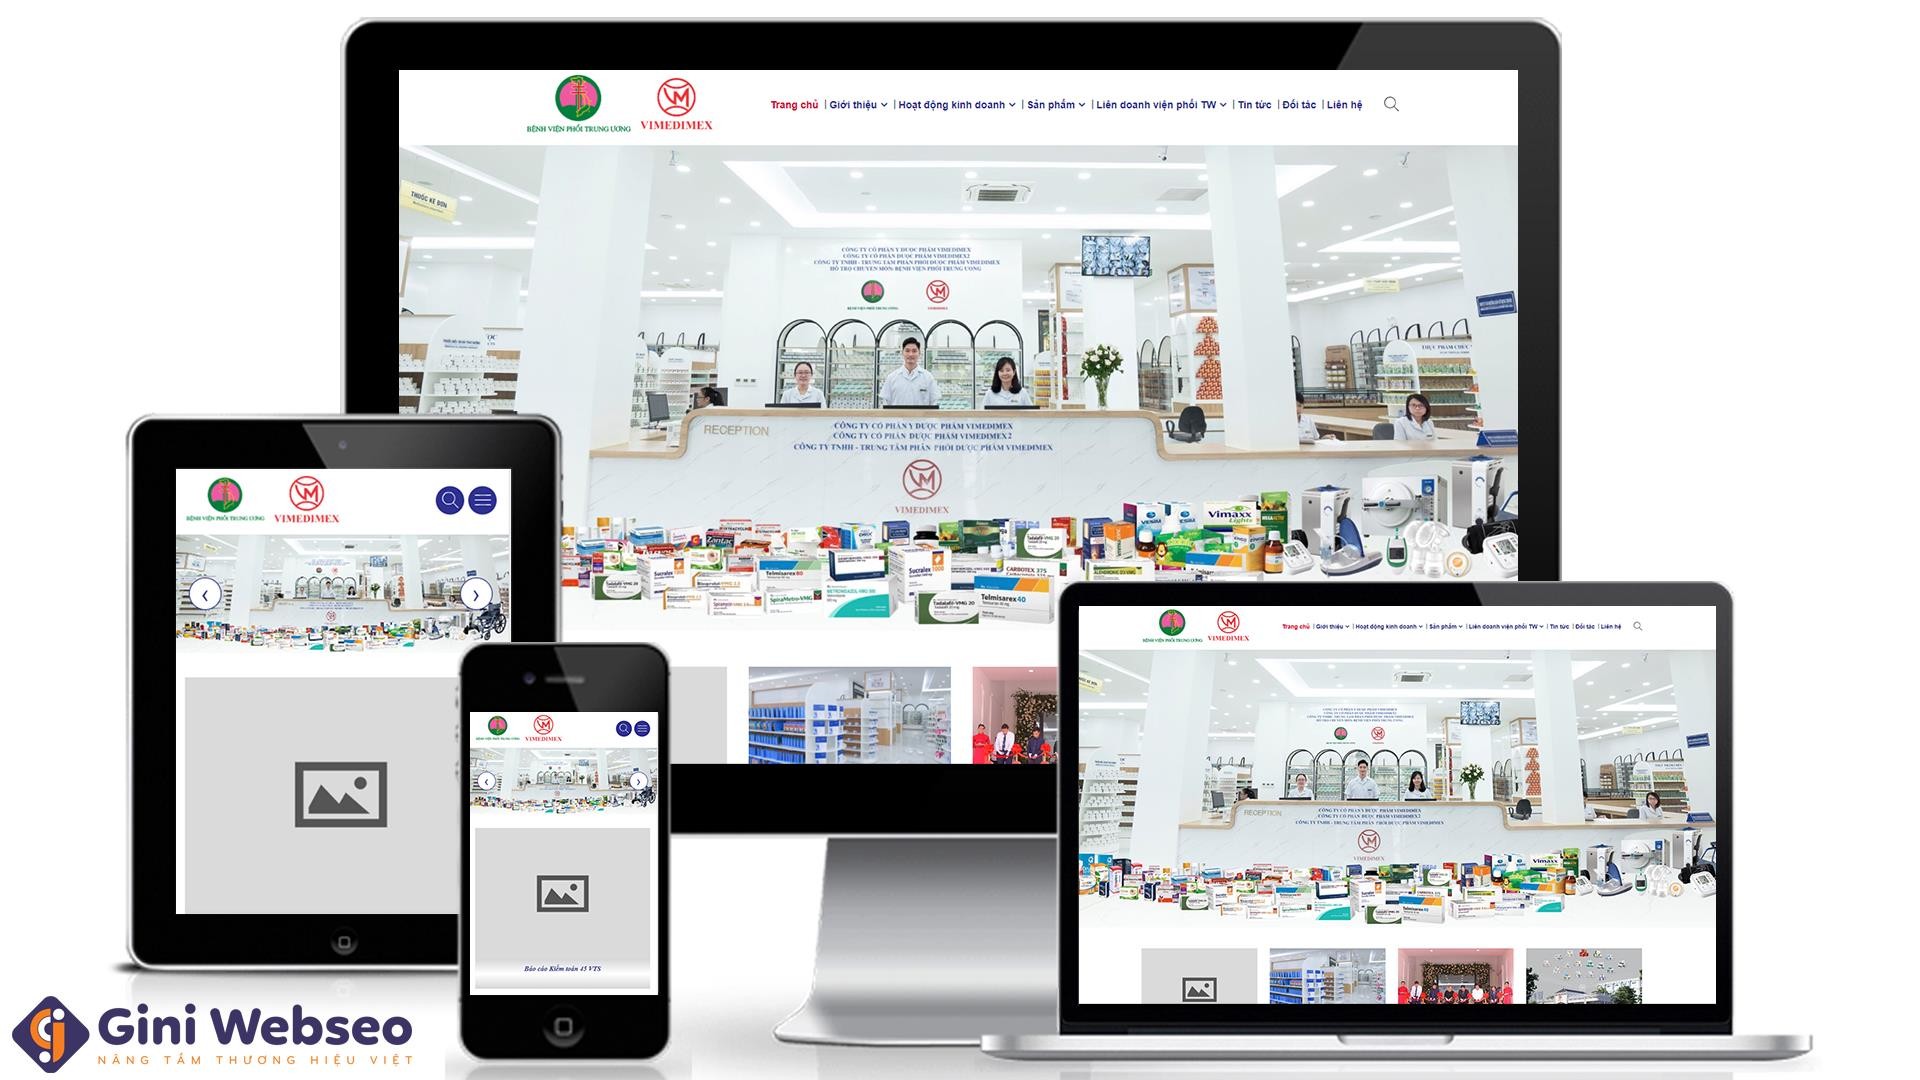 Thiết kế website bệnh viện Vietpharm